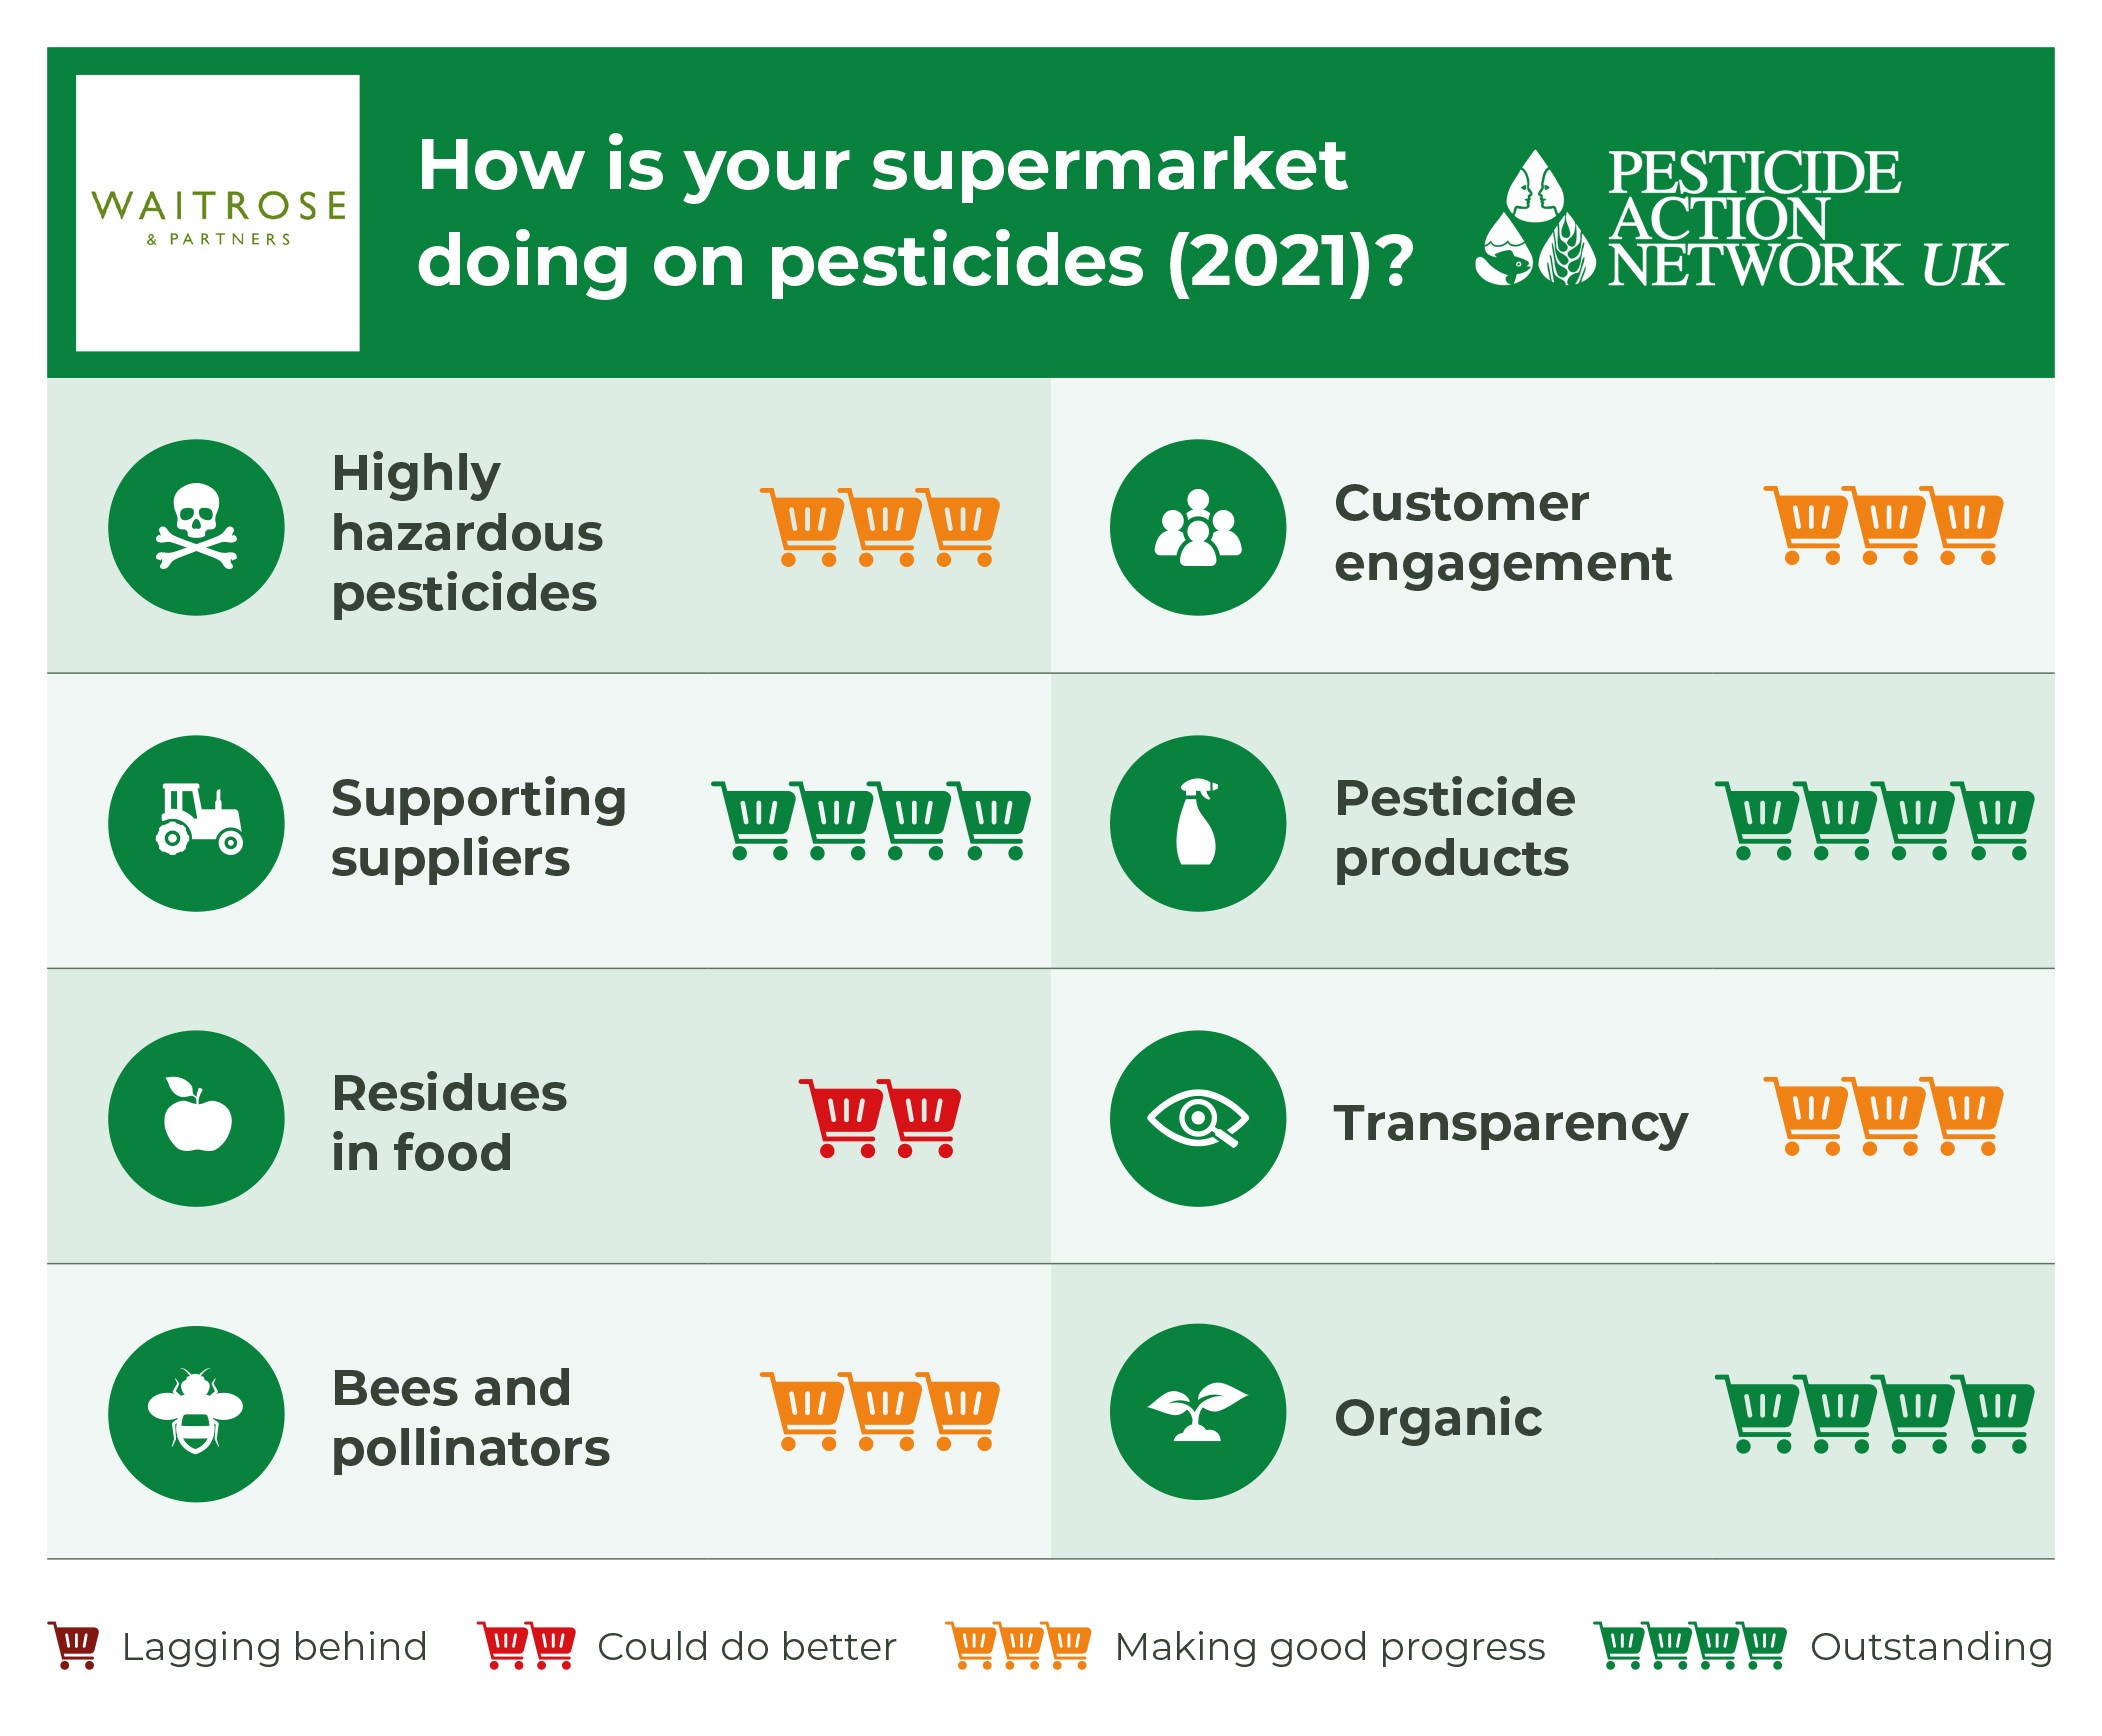 How is Waitrose doing on pesticides?